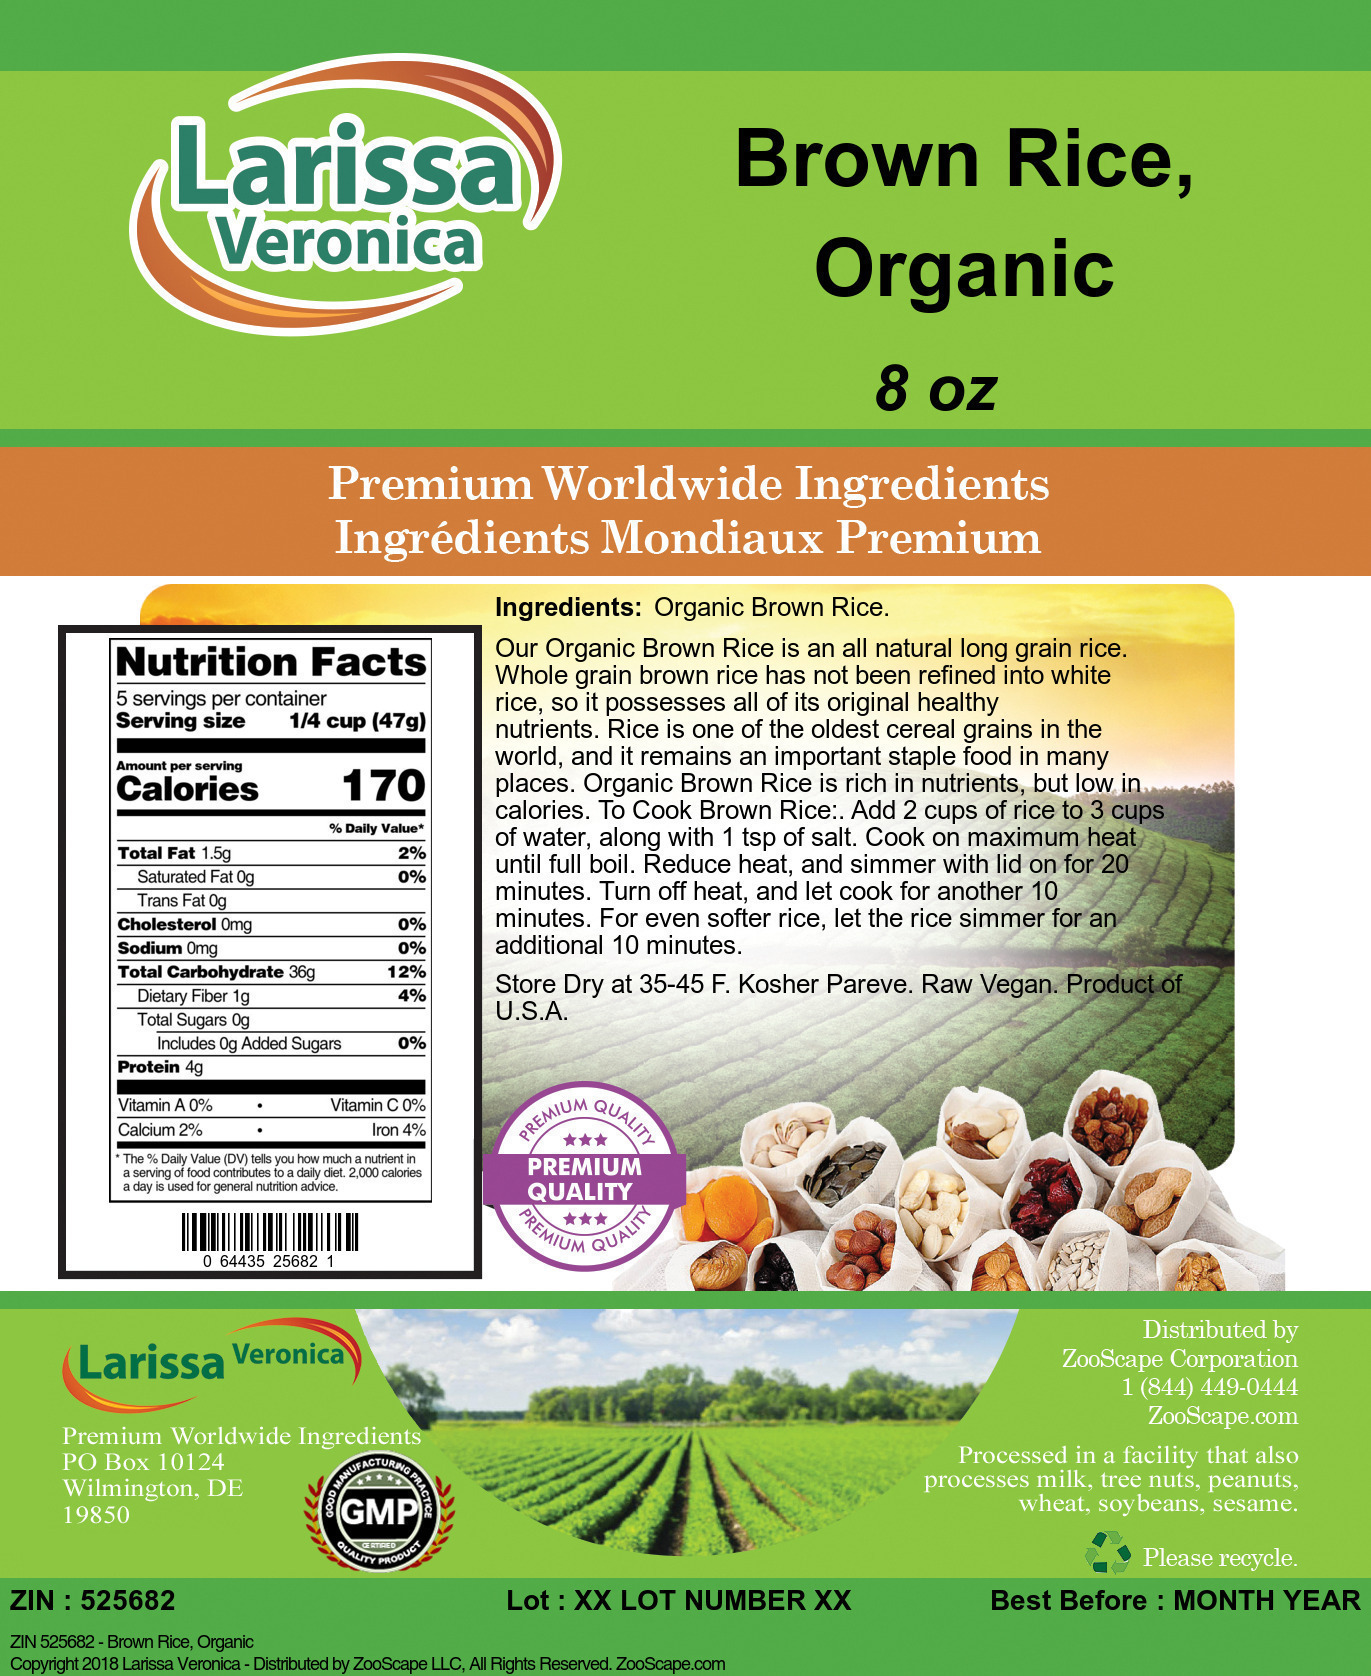 Brown Rice, Organic - Label